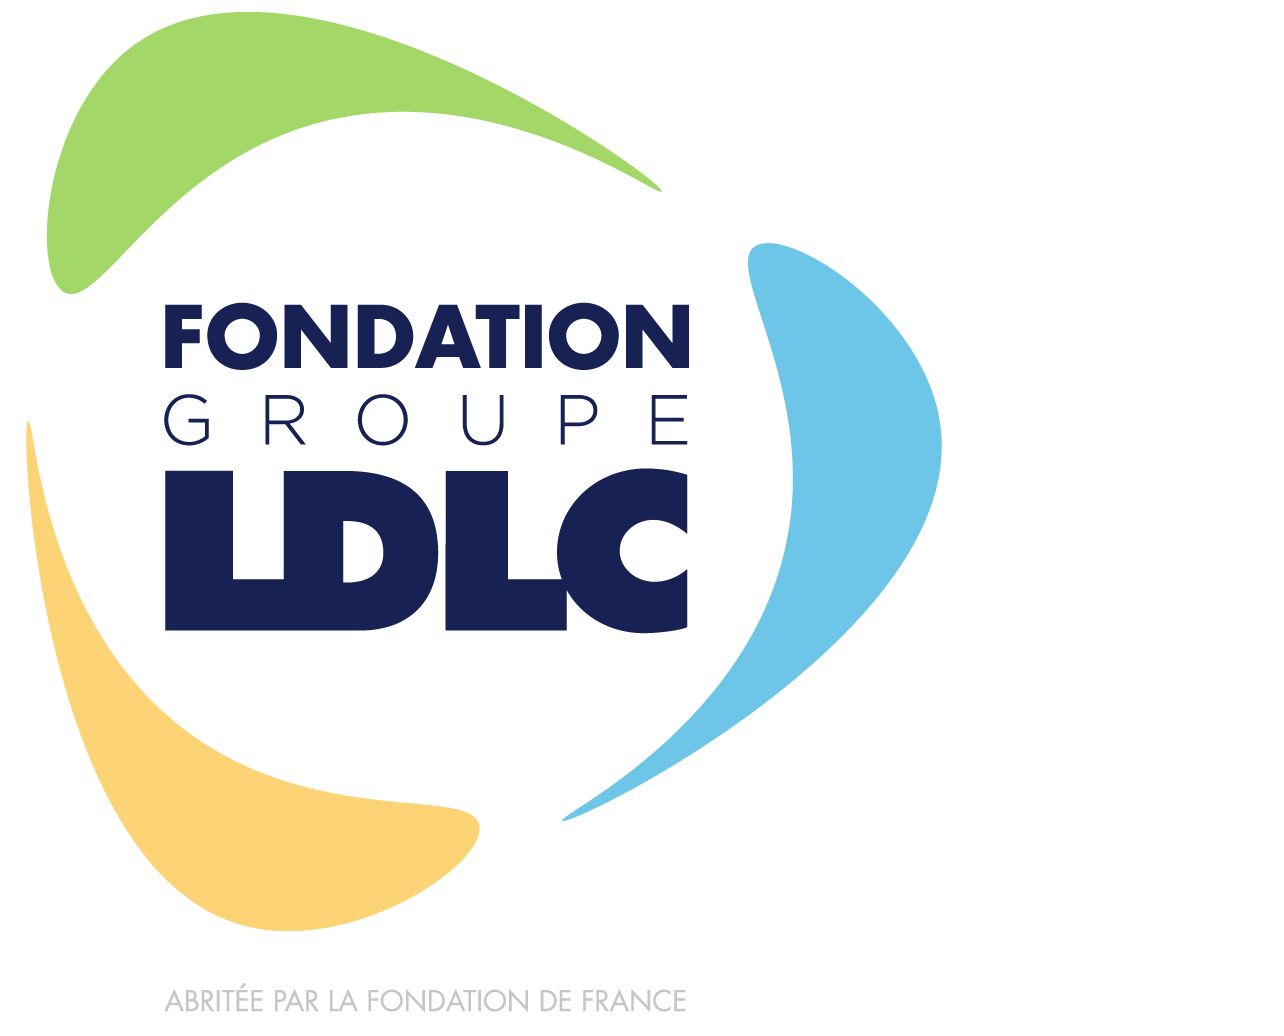 Fondation Groupe LDLC